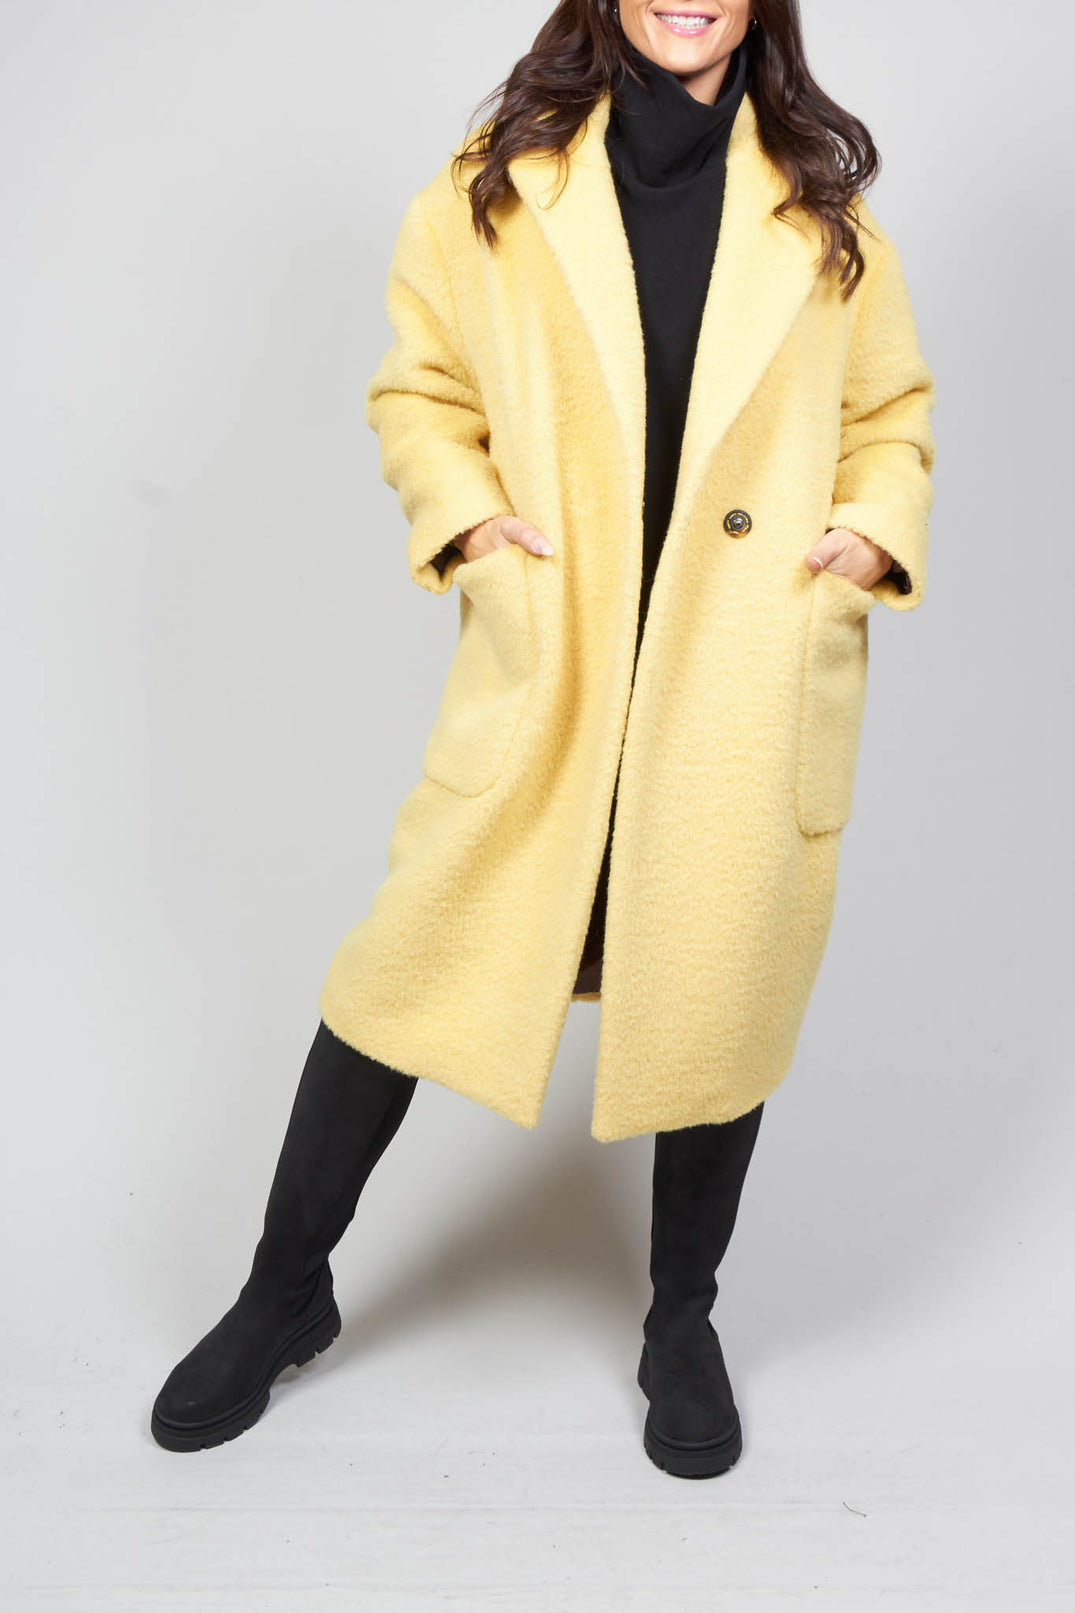 lady wearing a cream yellow longline wool coat